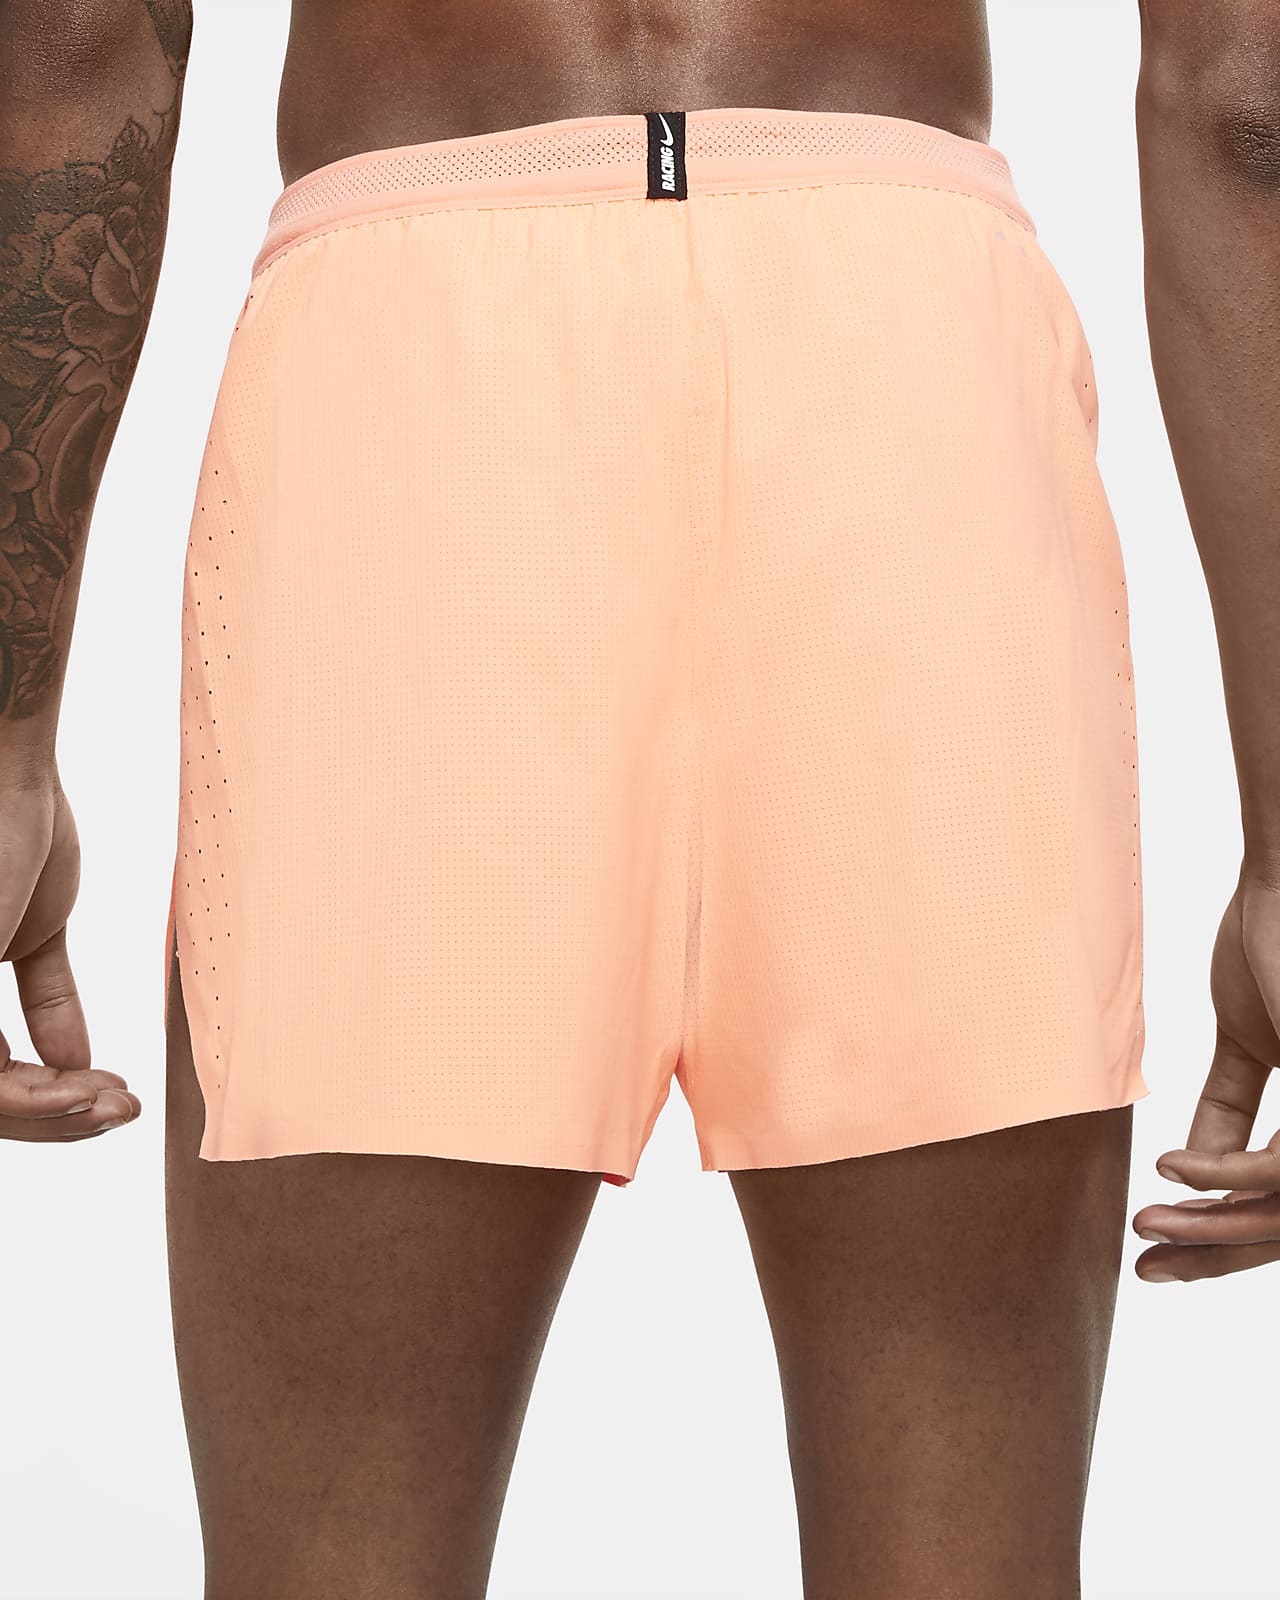 Nike AeroSwift 2in1 Short - Volt/Bright Citron - Mens Clothing